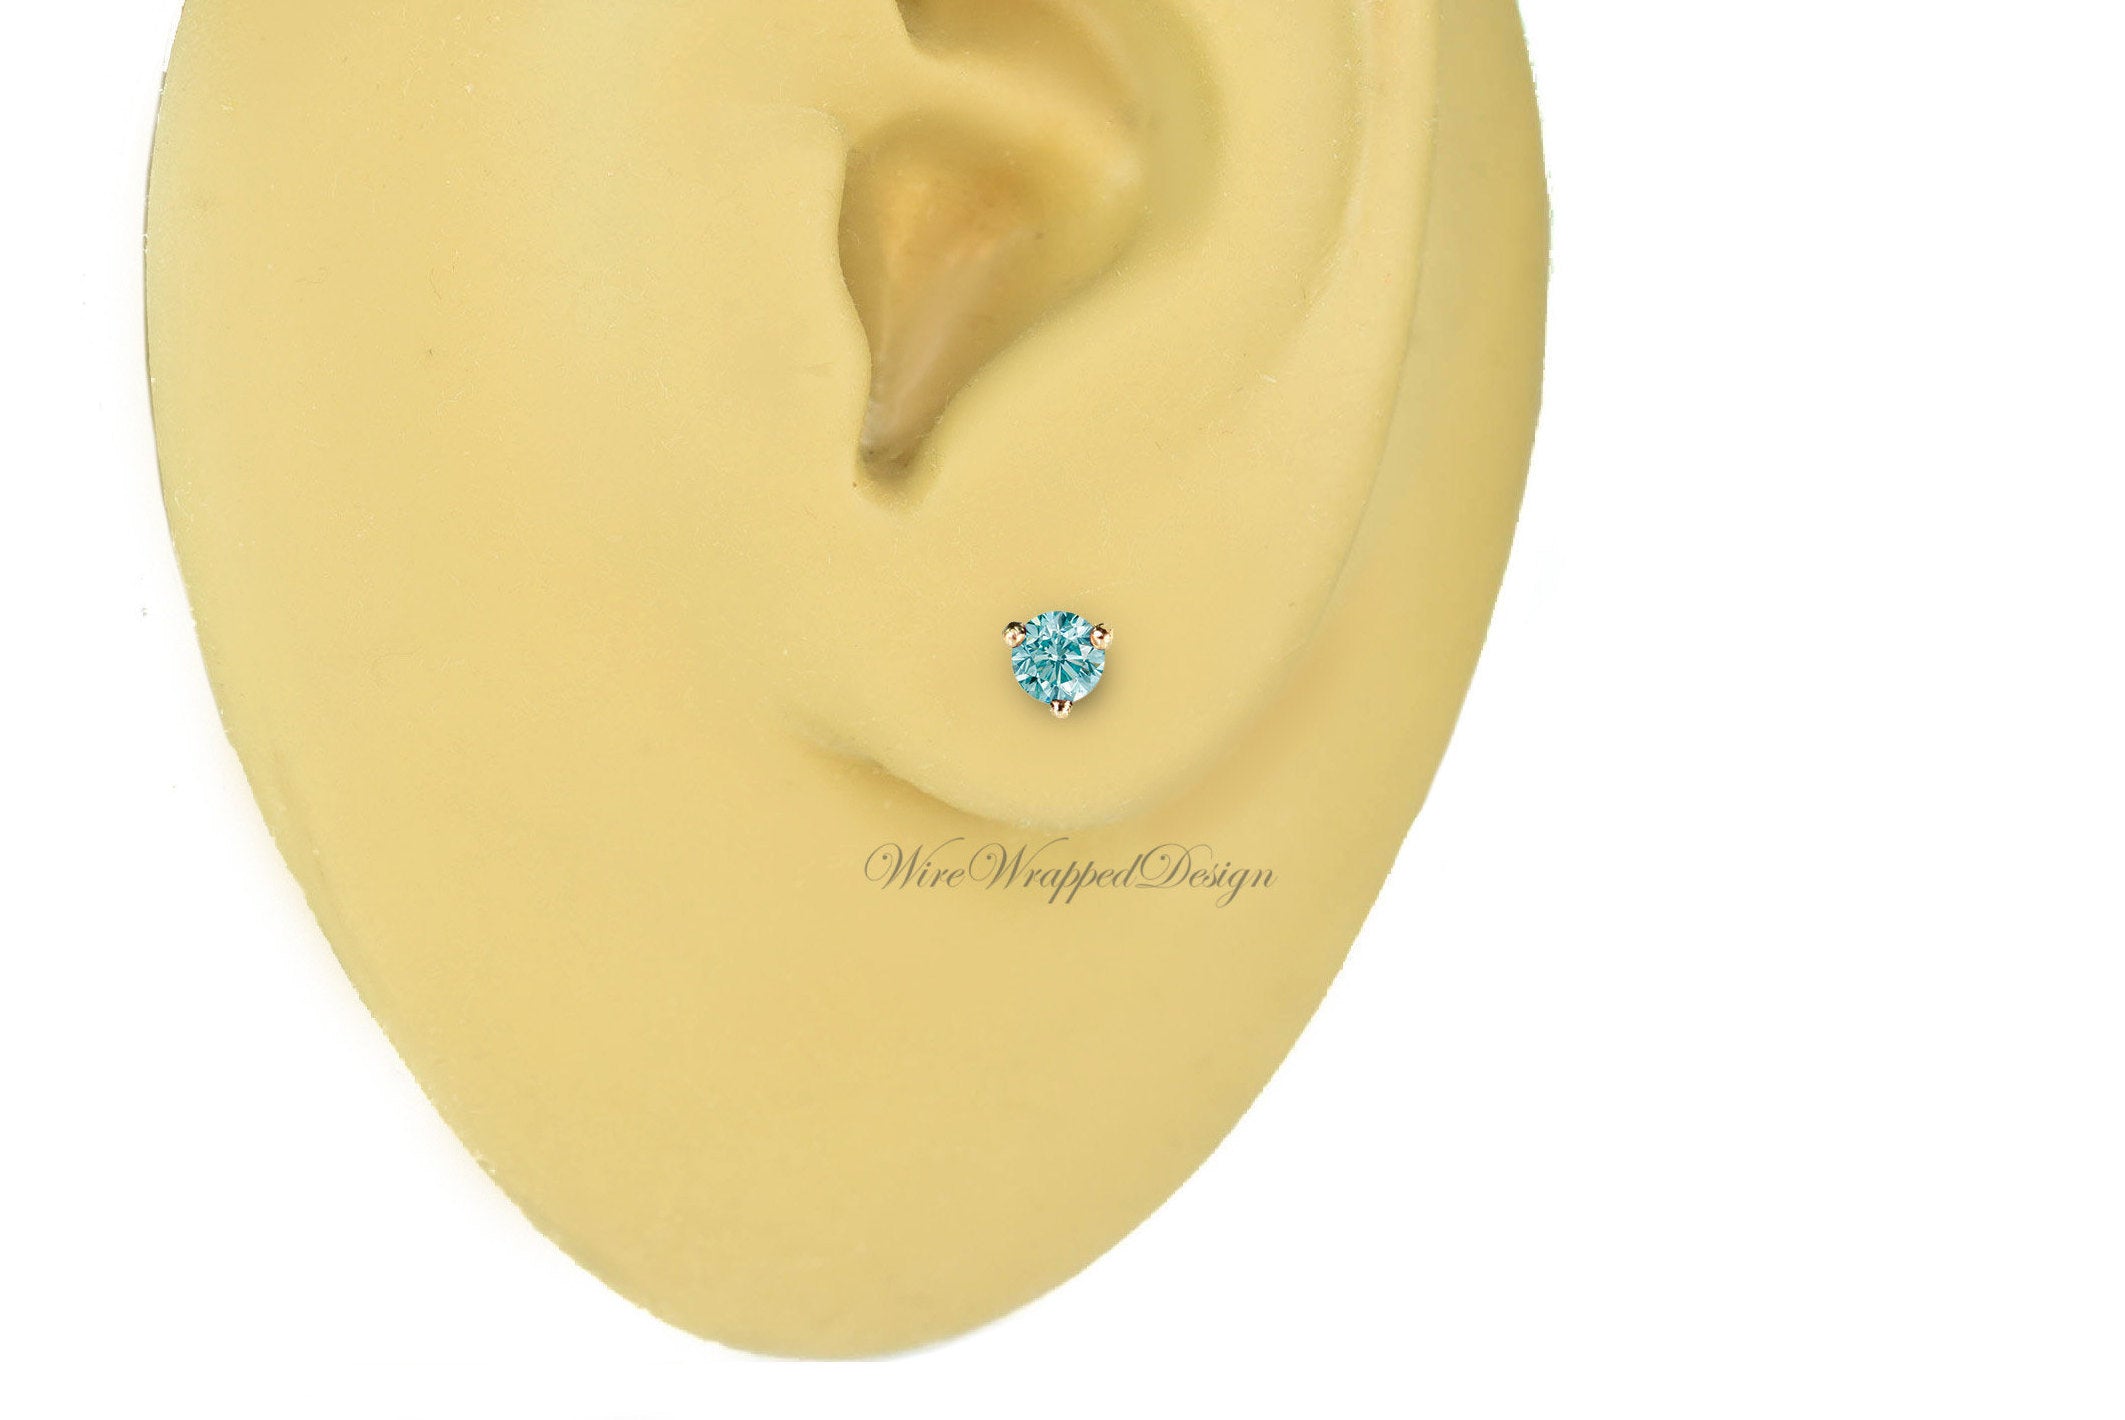 PAIR Genuine Aqua BLUE DIAMOND Earrings Studs 3mm 0.2tcw Martini 14k Solid Gold (Yellow, Rose, White) Platinum Silver Cartilage Helix Tragus